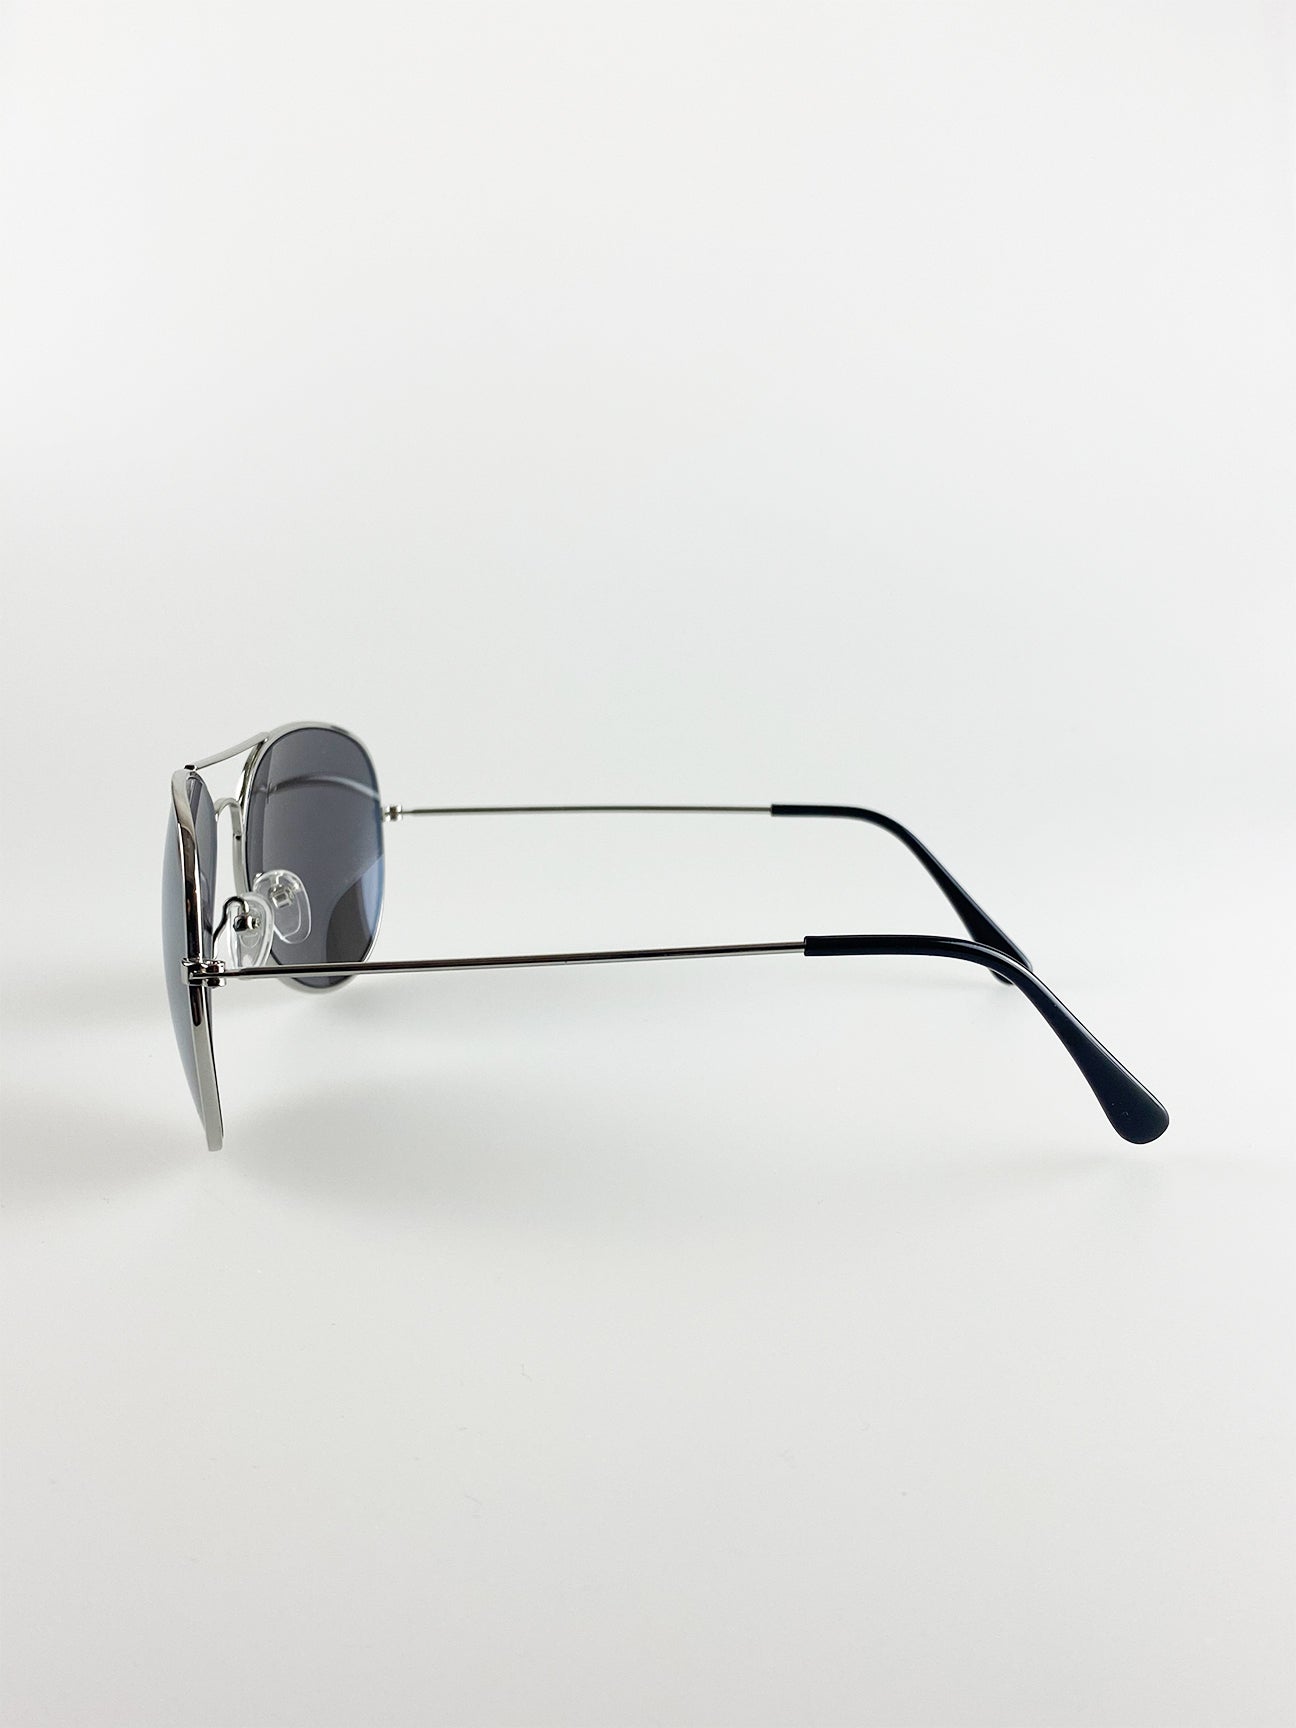 Silver Classic Mirrored Aviator Sunglasses with Silver Mirror Lenses